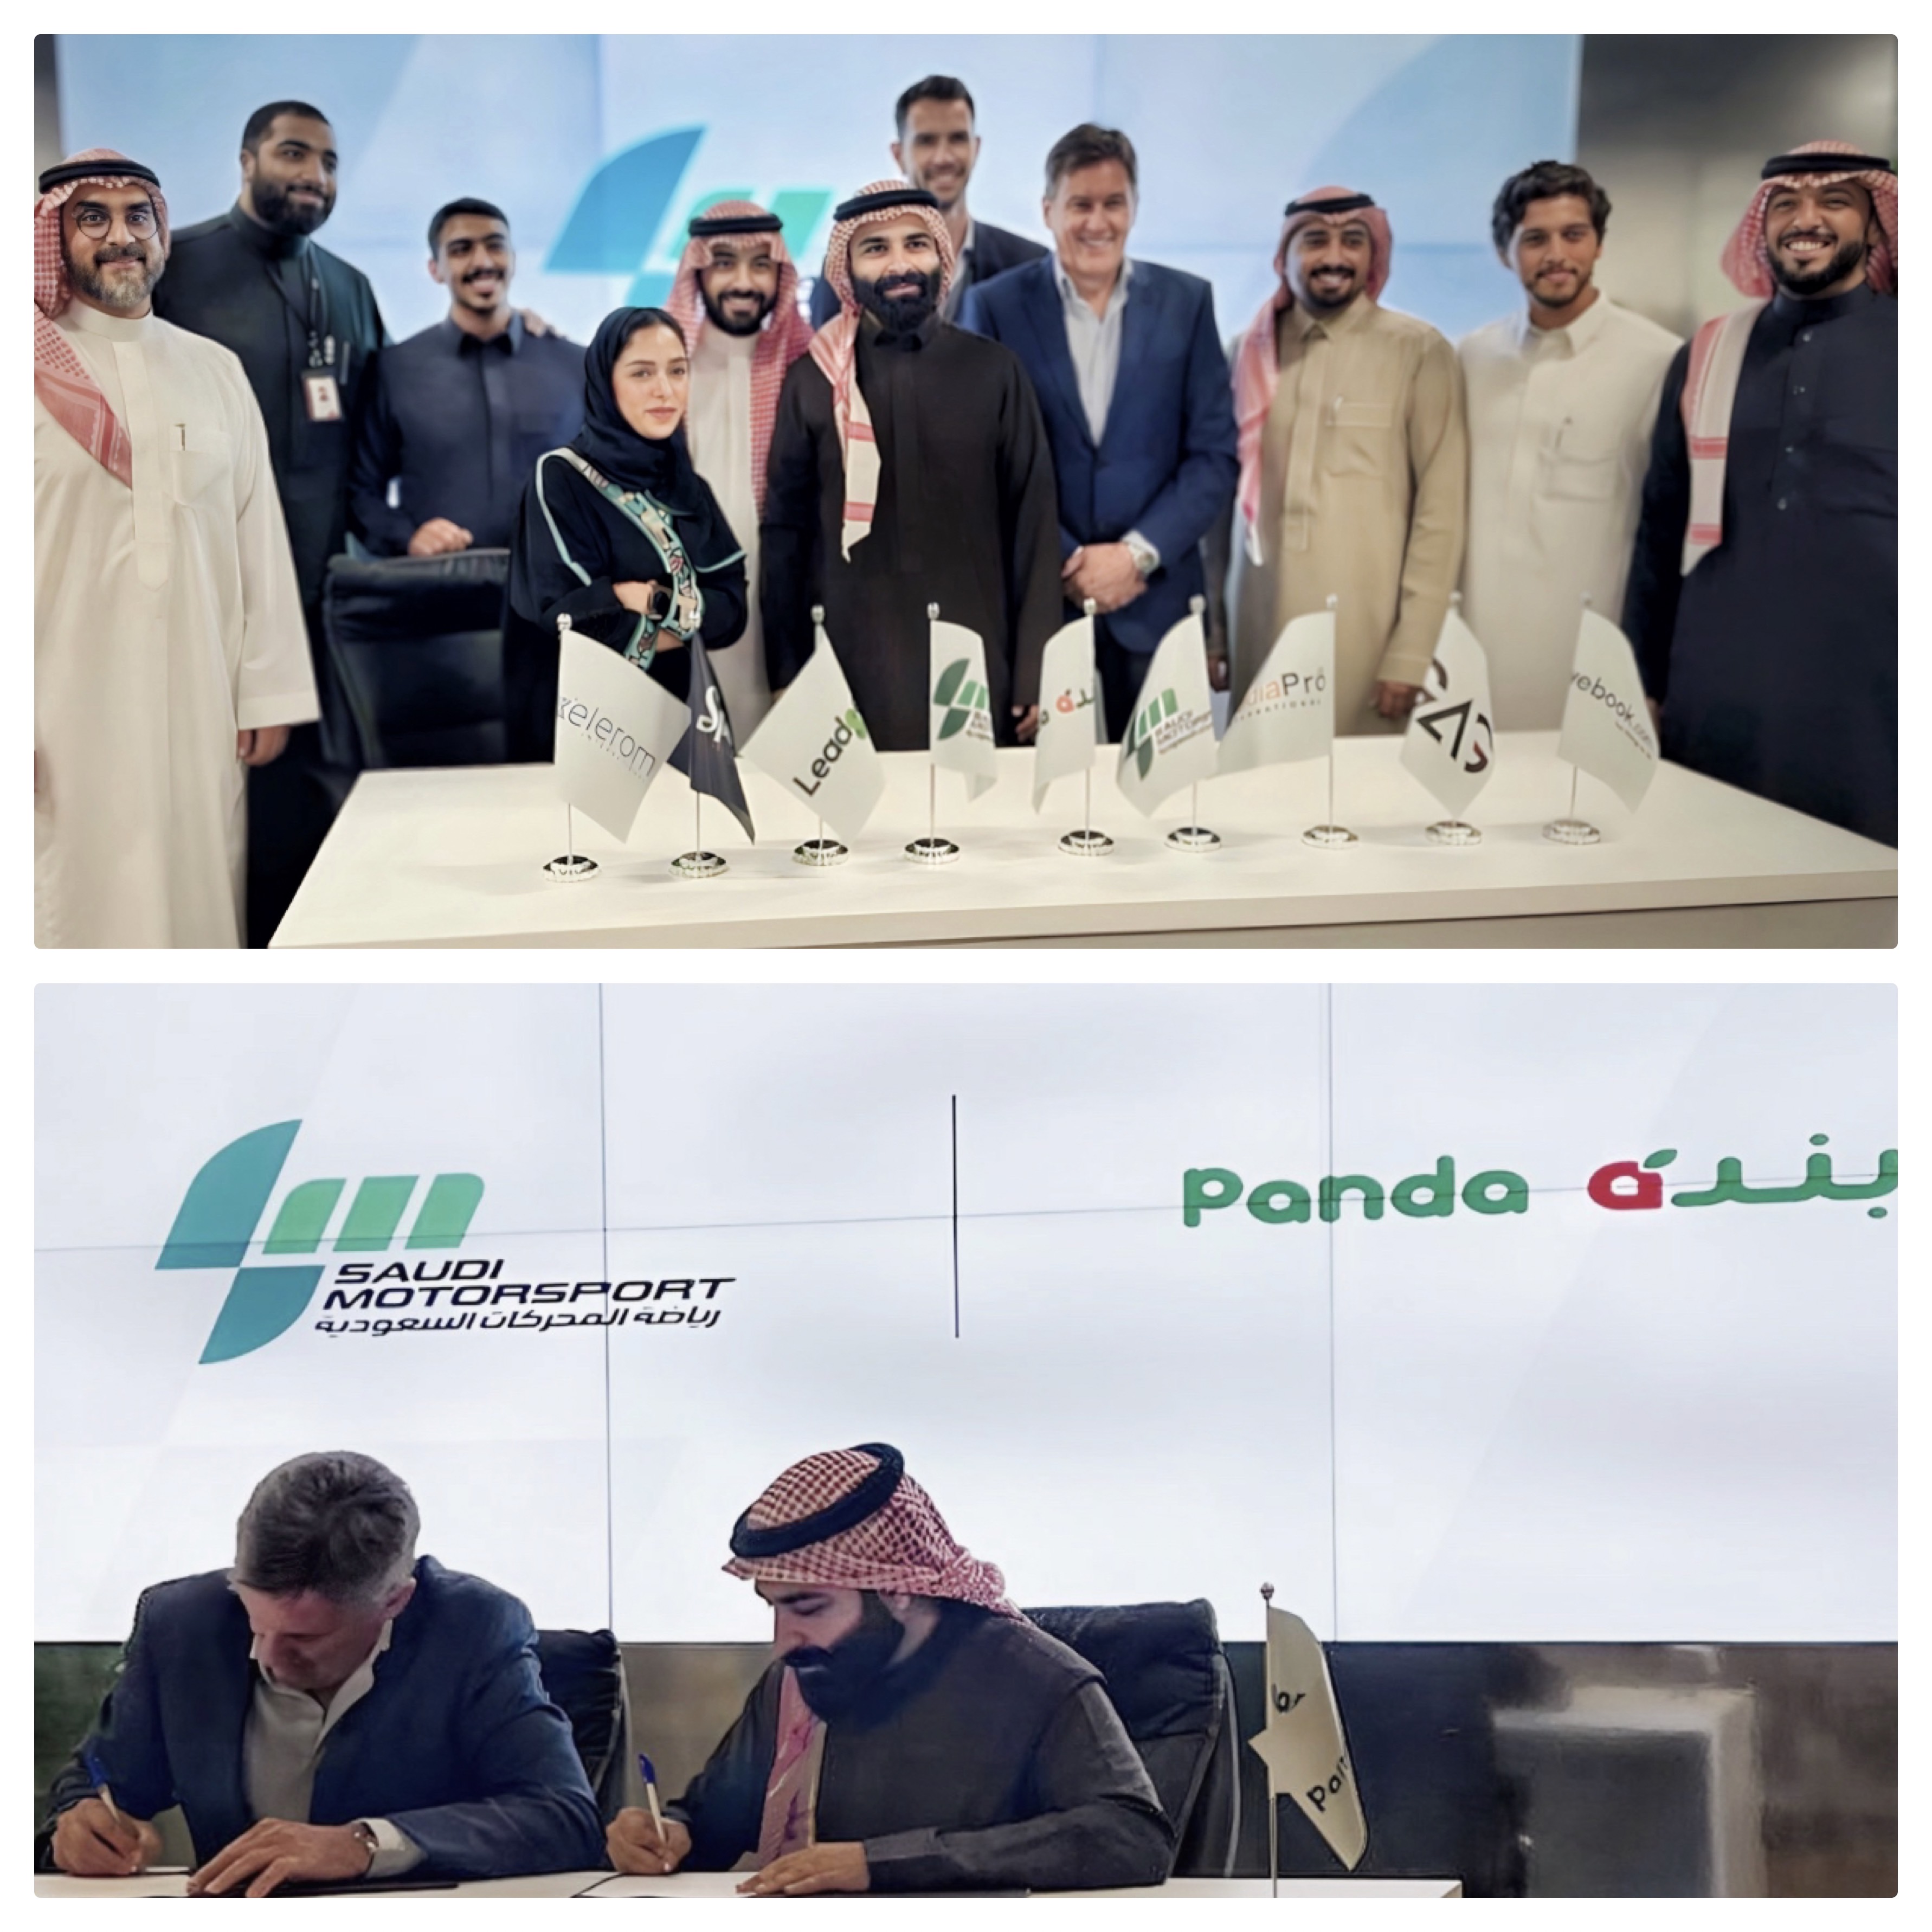 Panda's Strategic Partnership with Saudi Motorsport